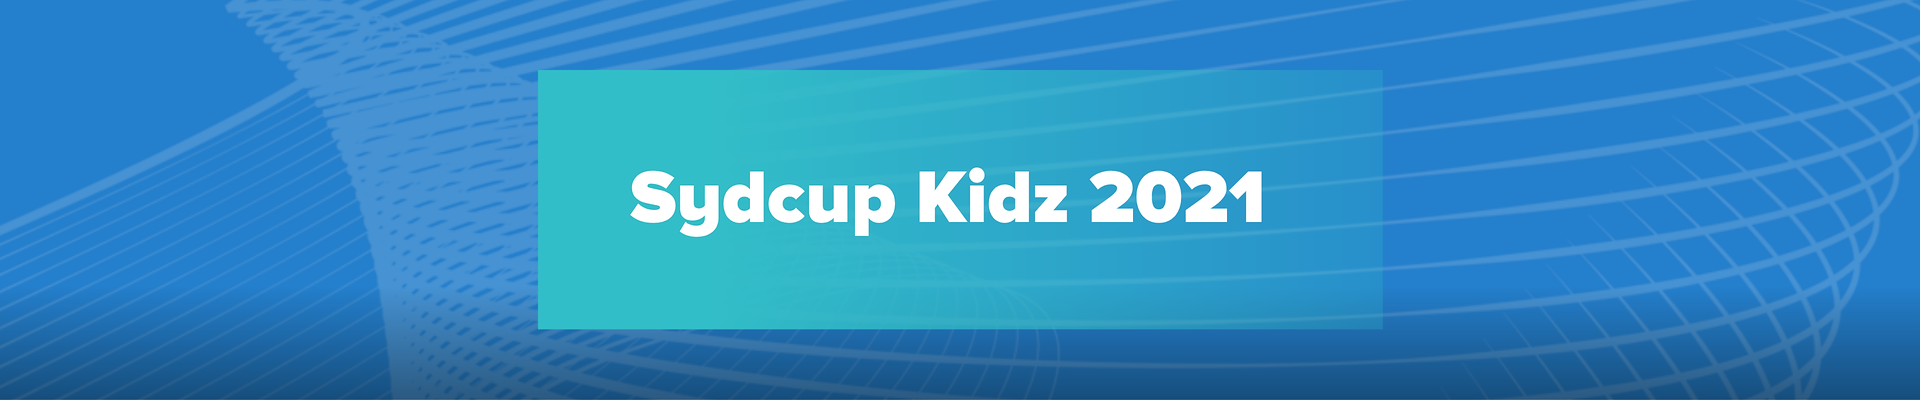 Syd Cup Kidz 2021 Samlet